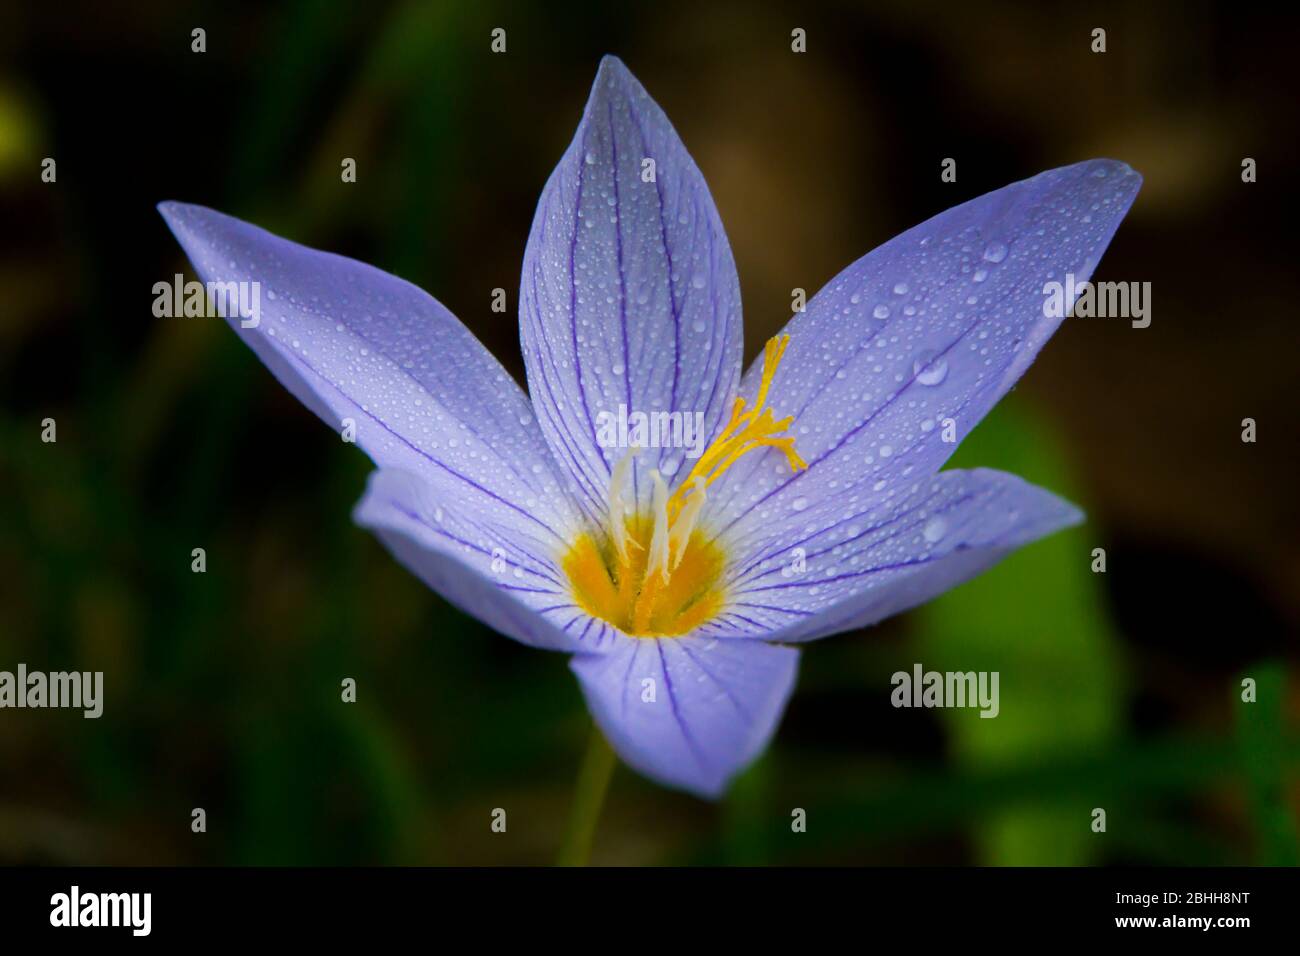 blue crocus flower close up Stock Photo